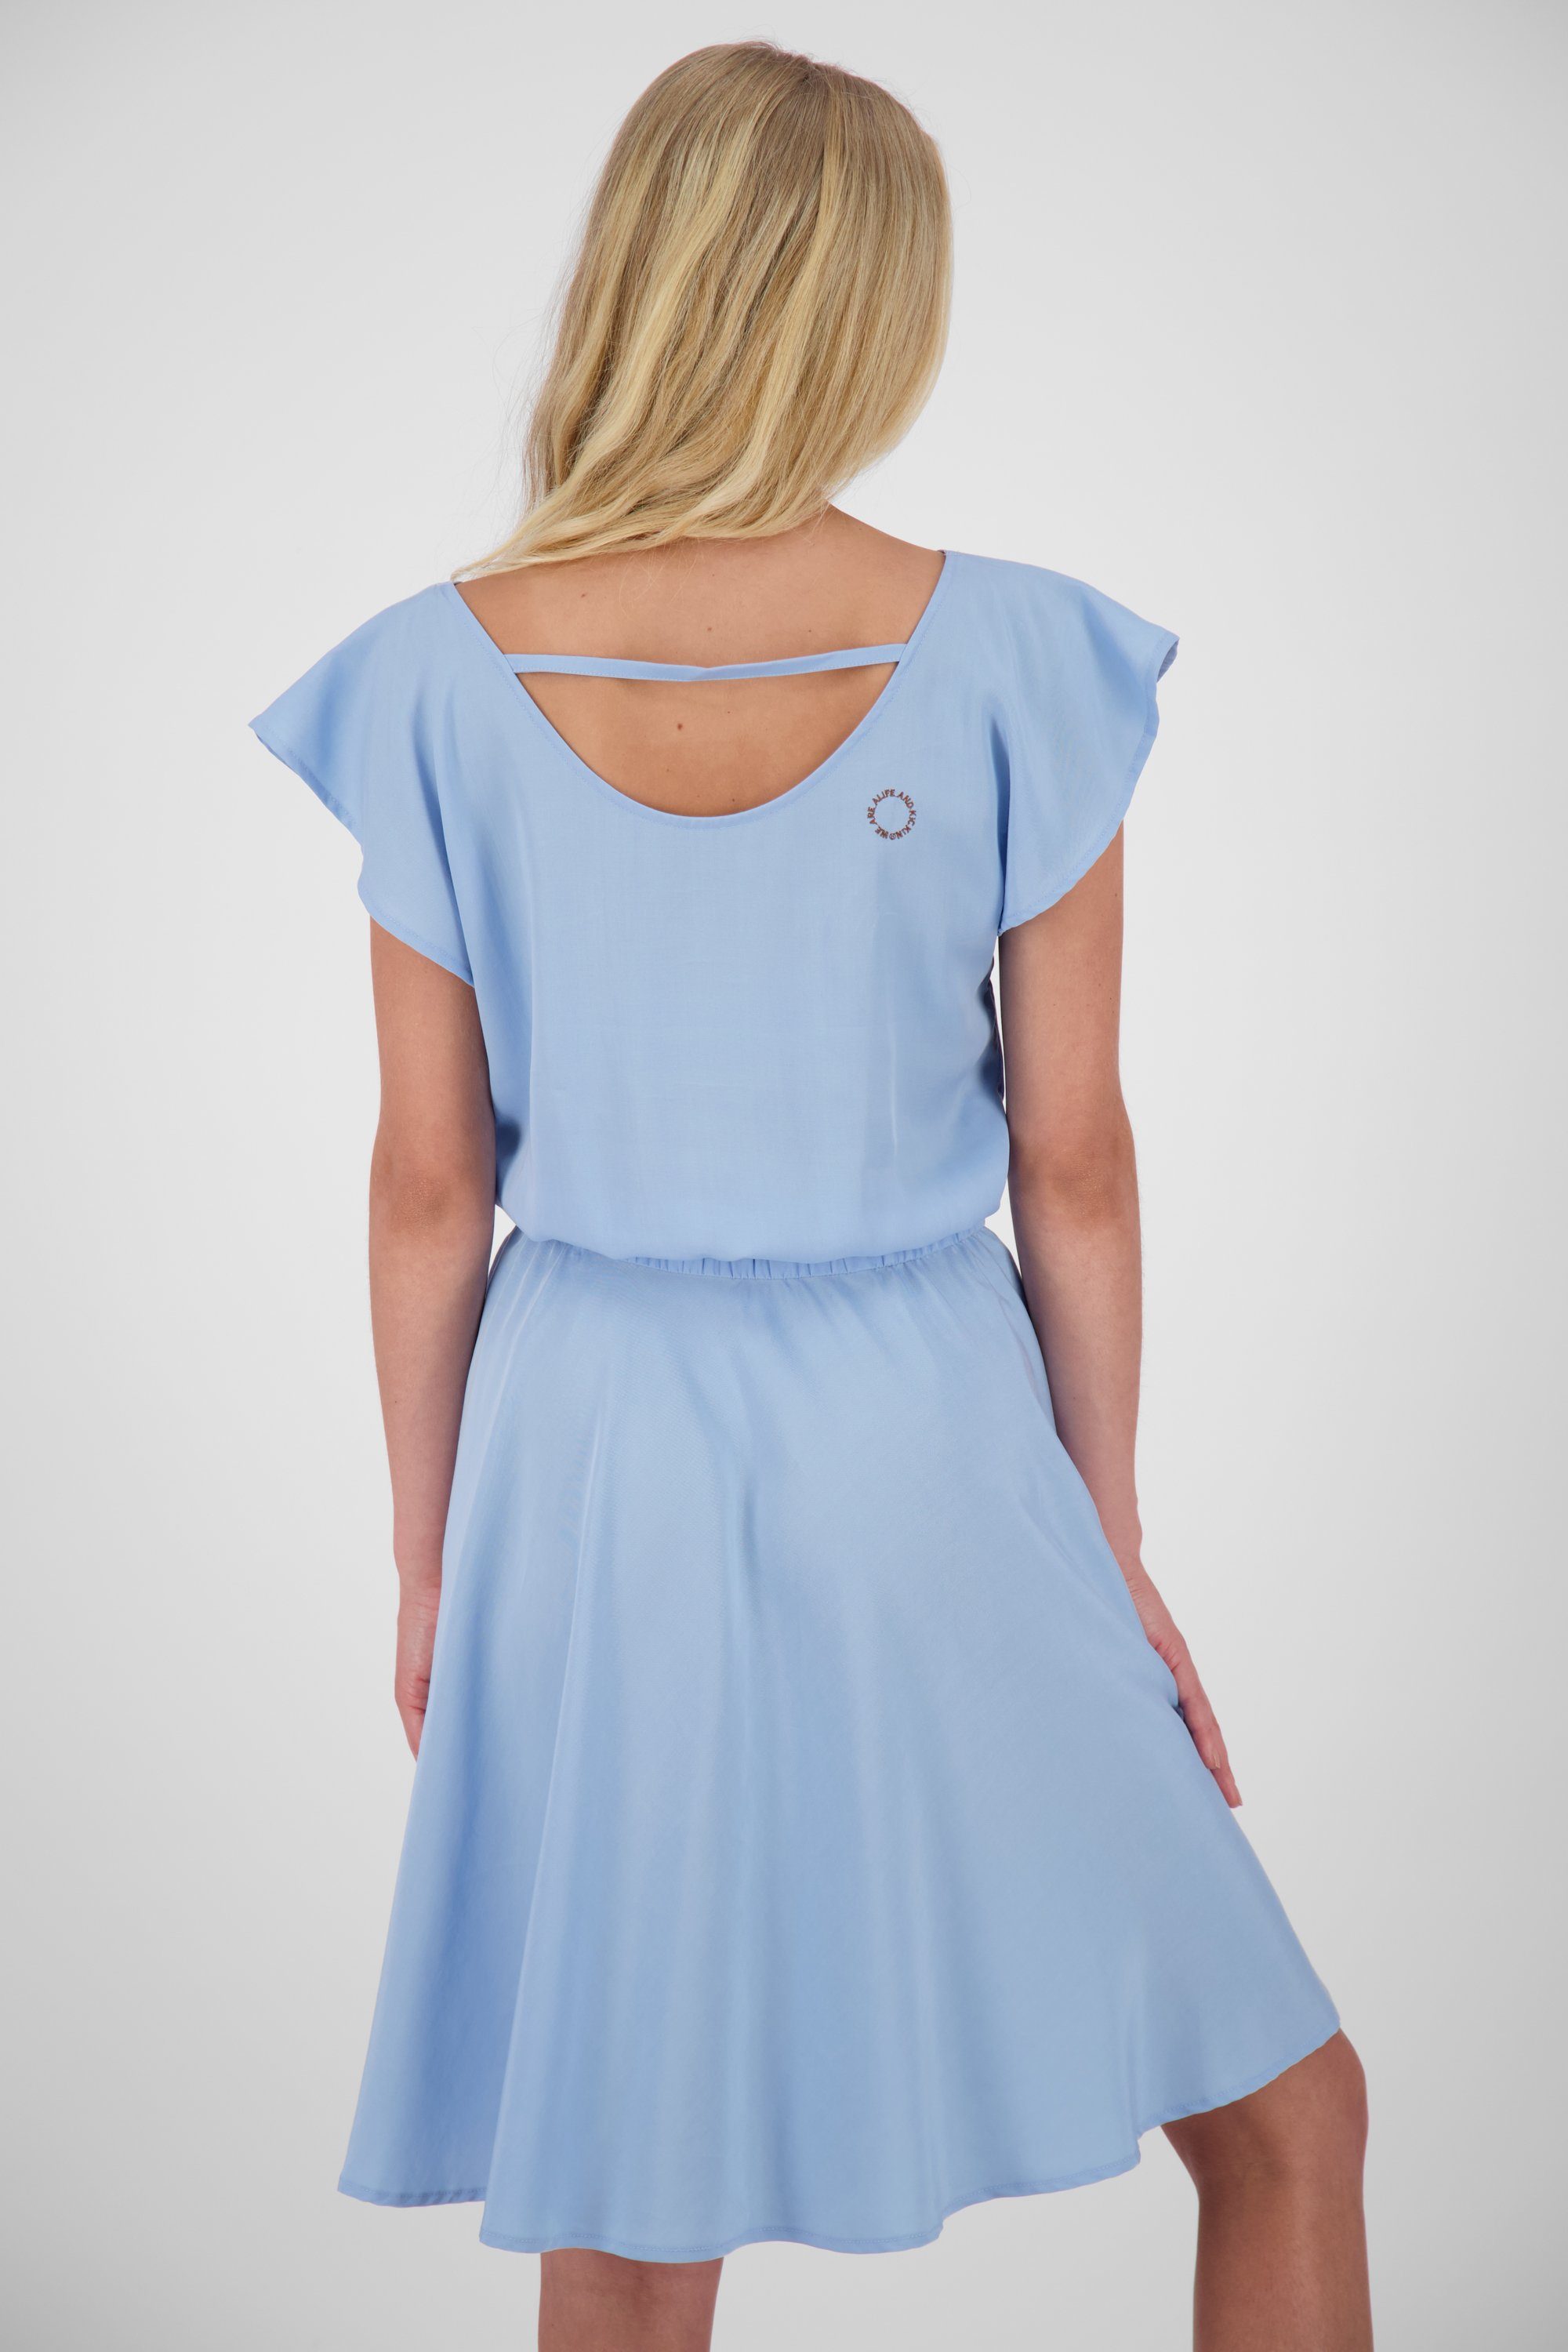 Alife Kickin frozen Jerseykleid Dress Damen Sommerkleid, IsabellaAK & Kleid